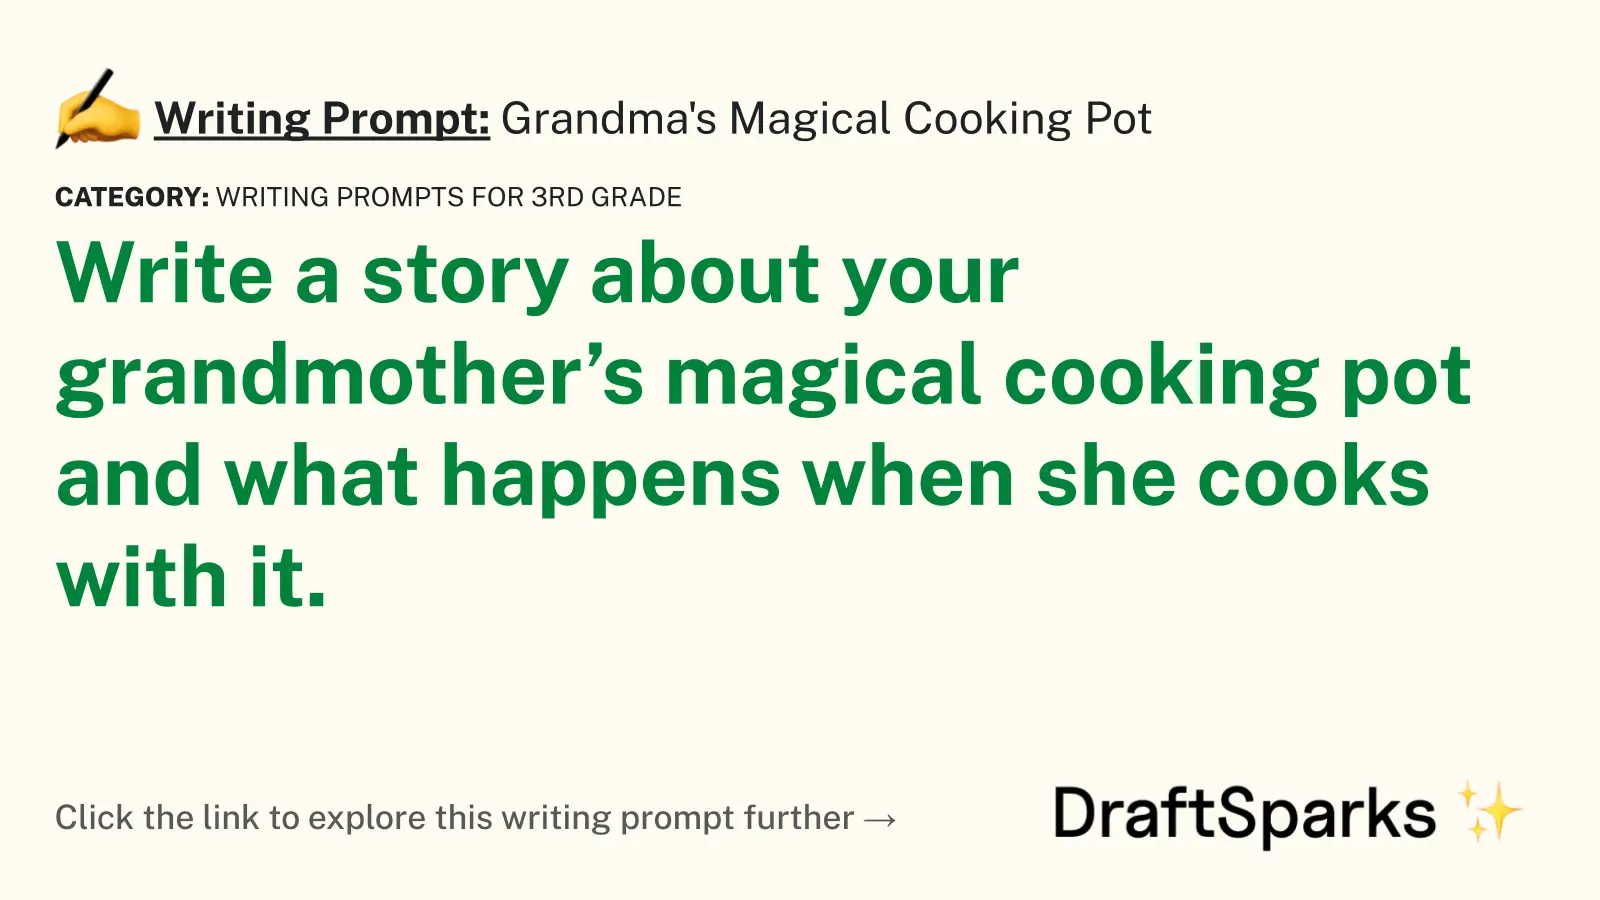 Grandma’s Magical Cooking Pot